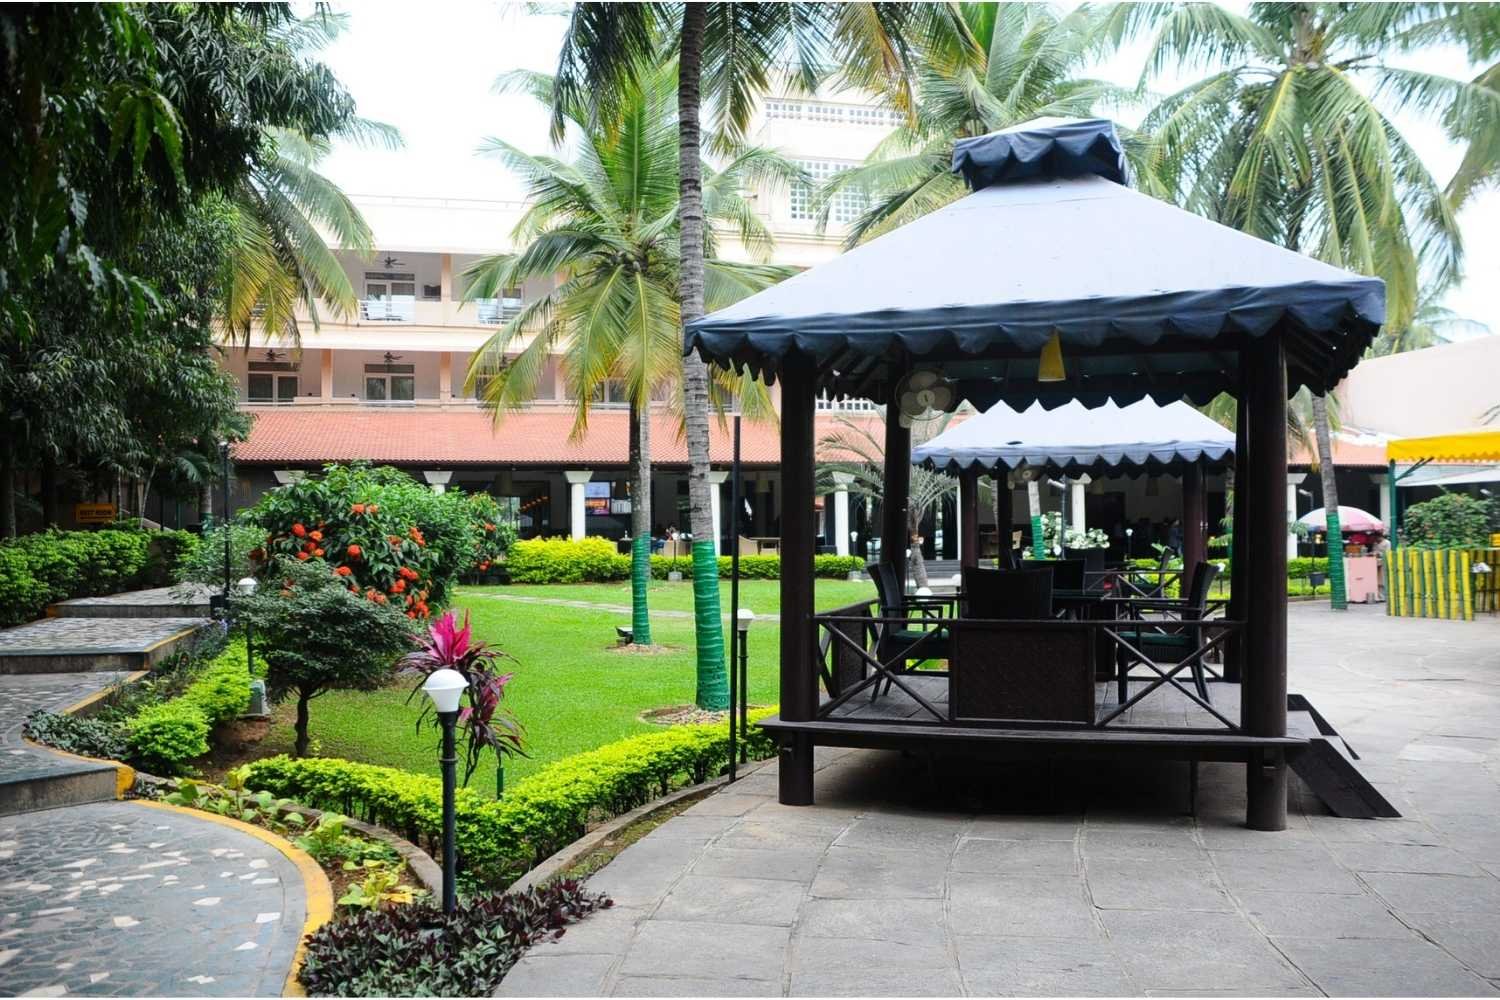 Royal Orchid Resort for resort weddings in Bangalore